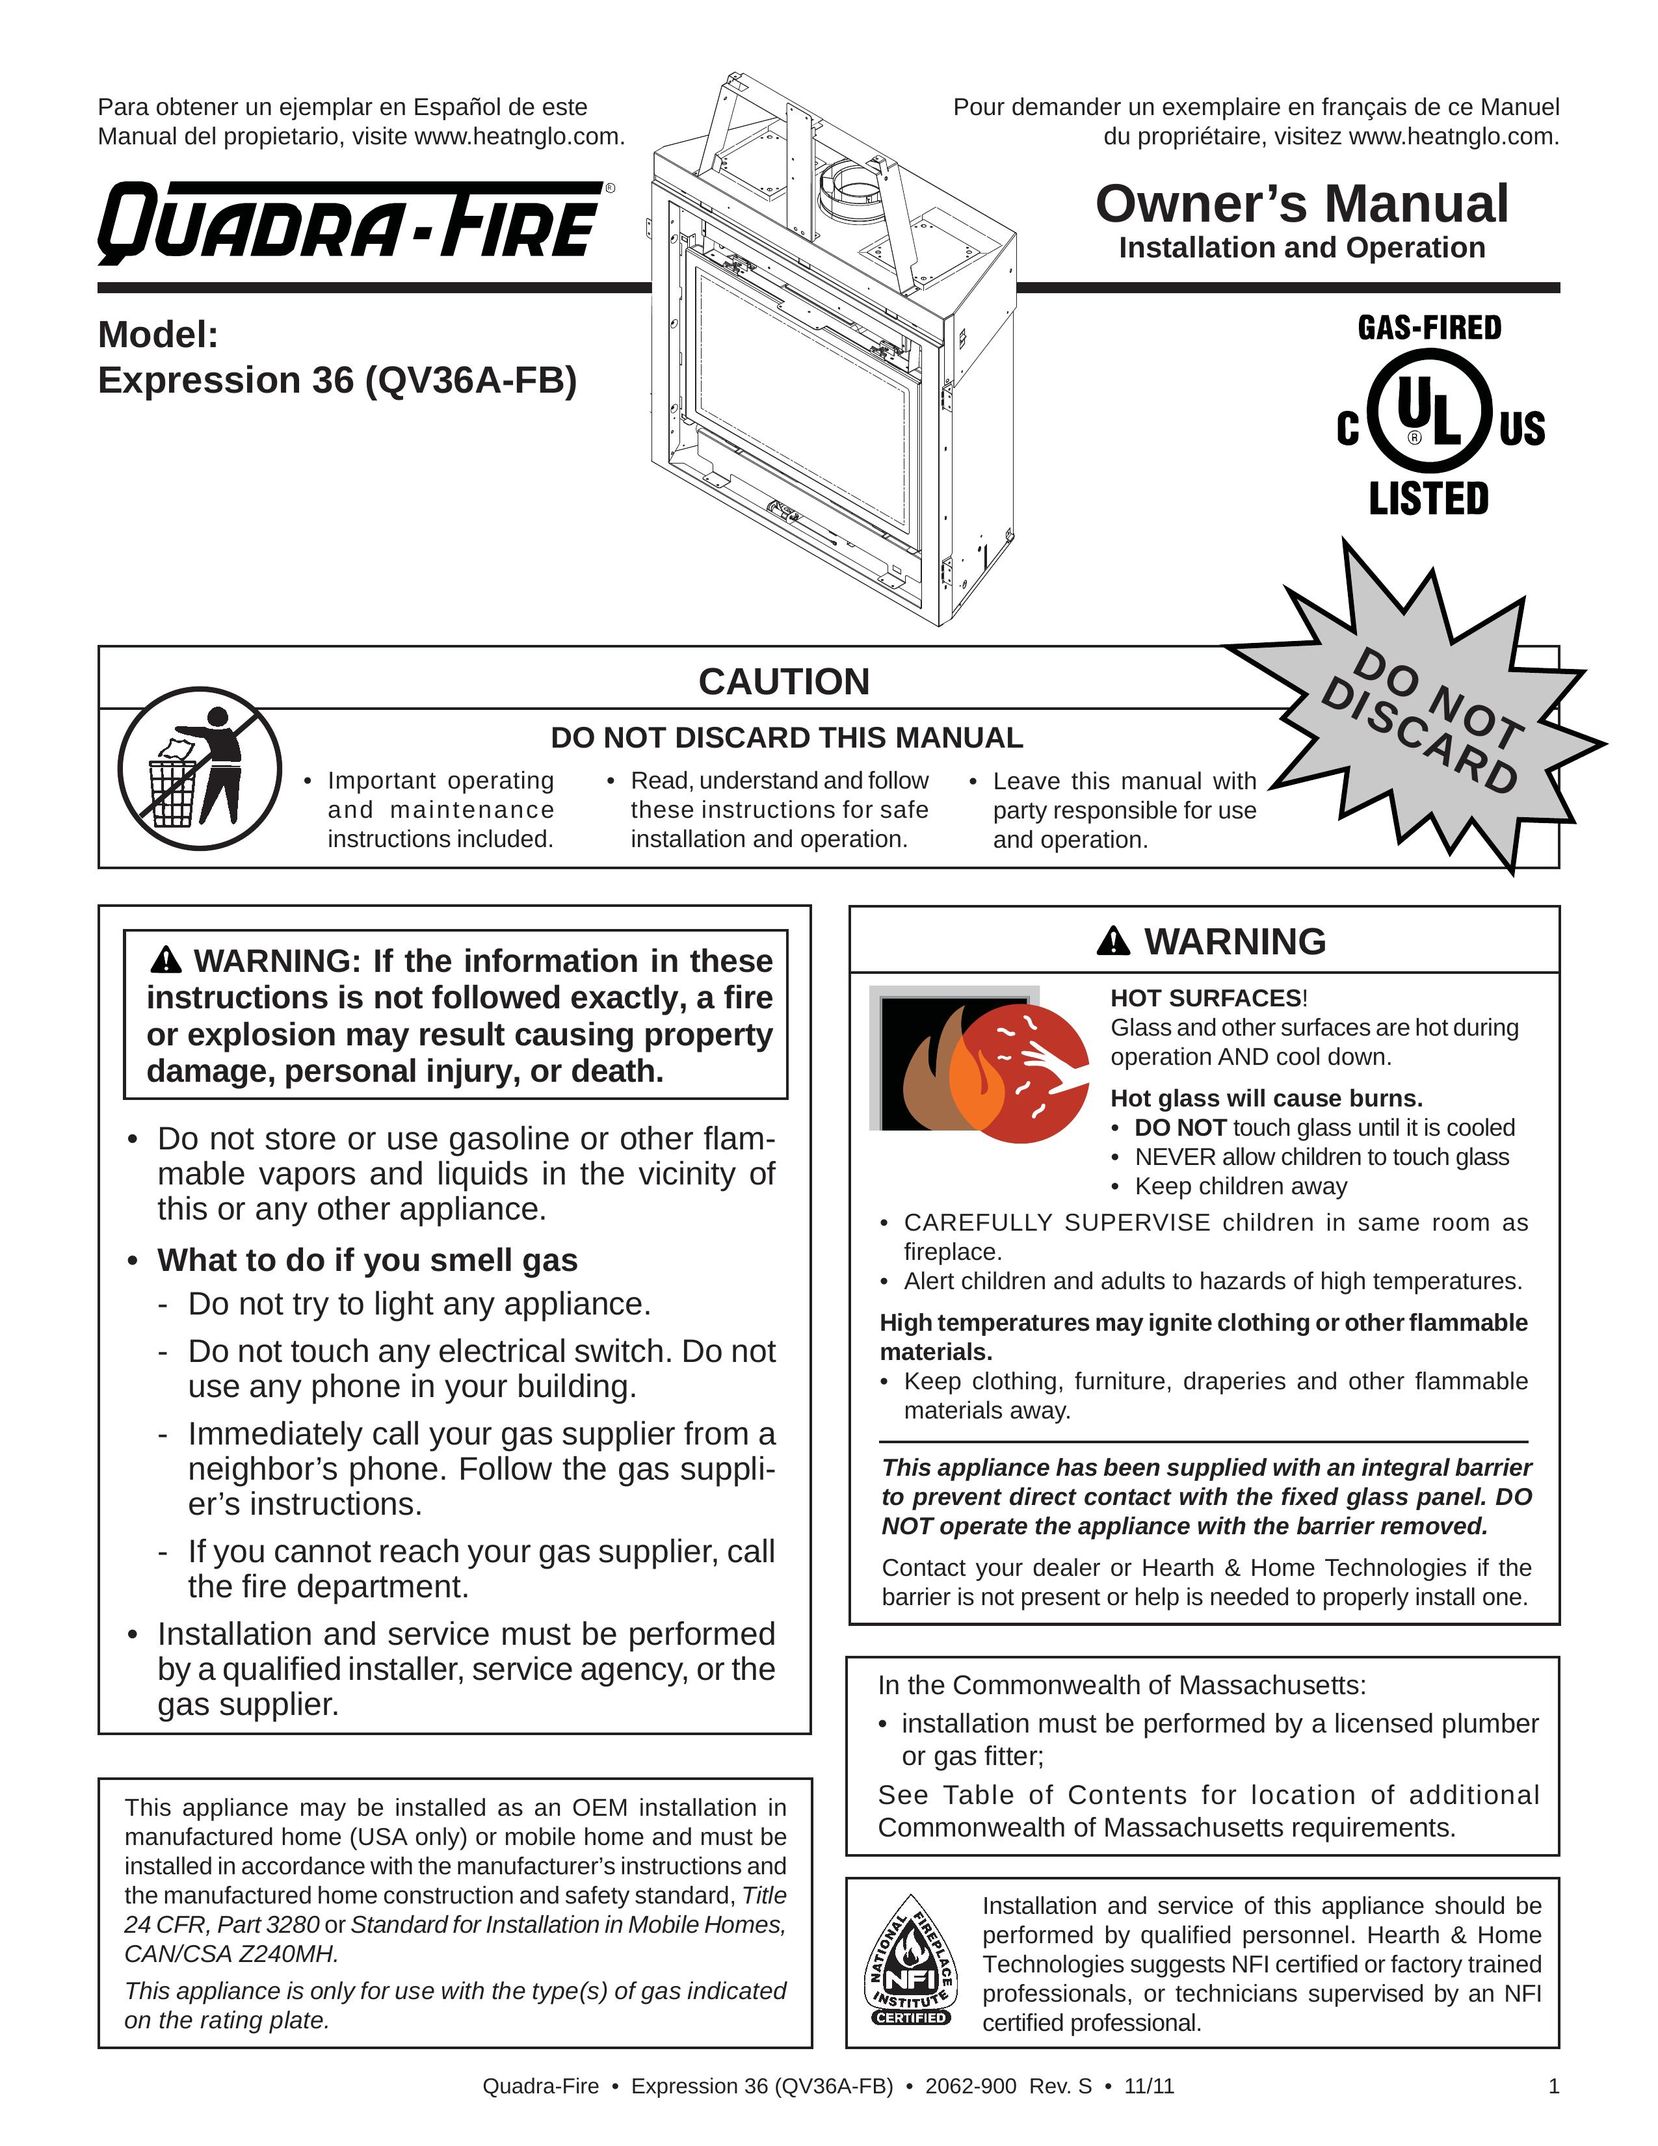 Quadra-Fire QV36A-FB Gas Heater User Manual